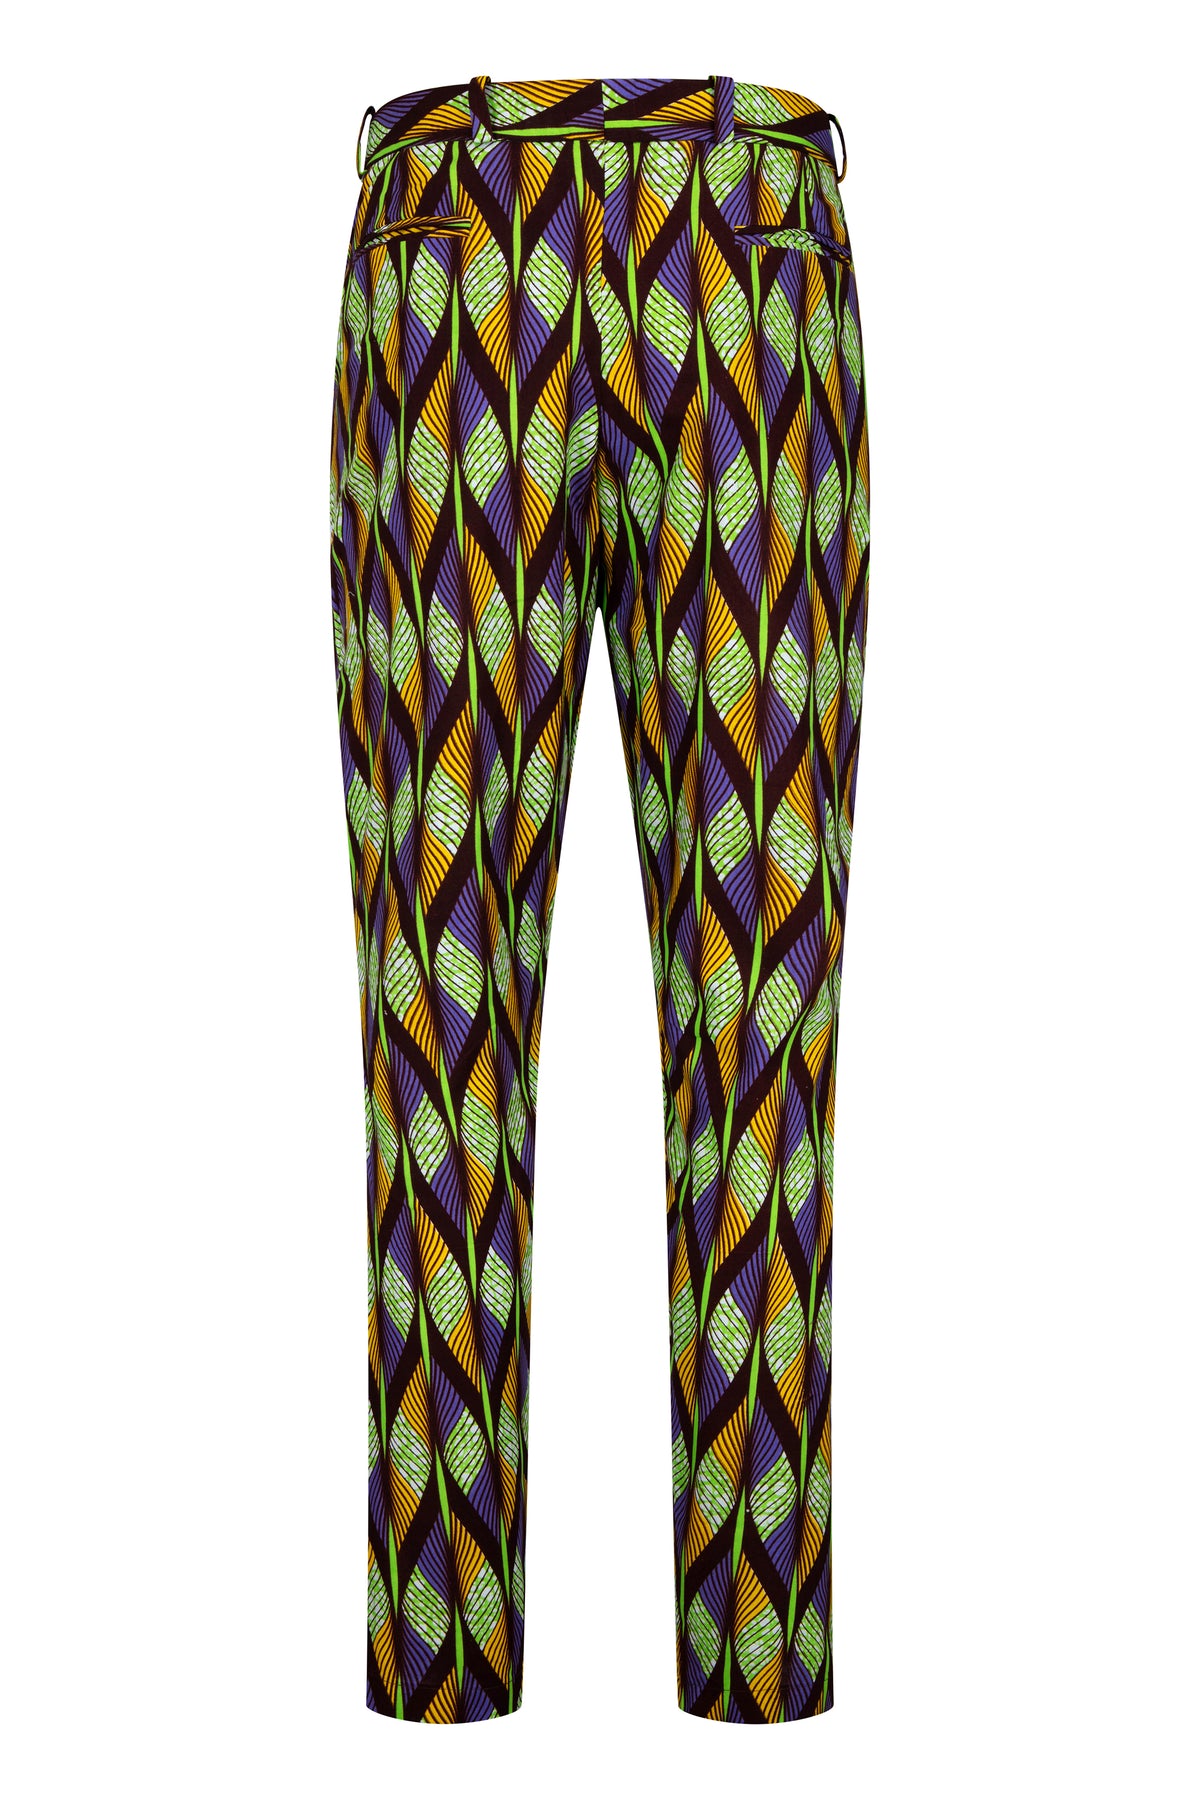 Ohema Ohene African print trousers